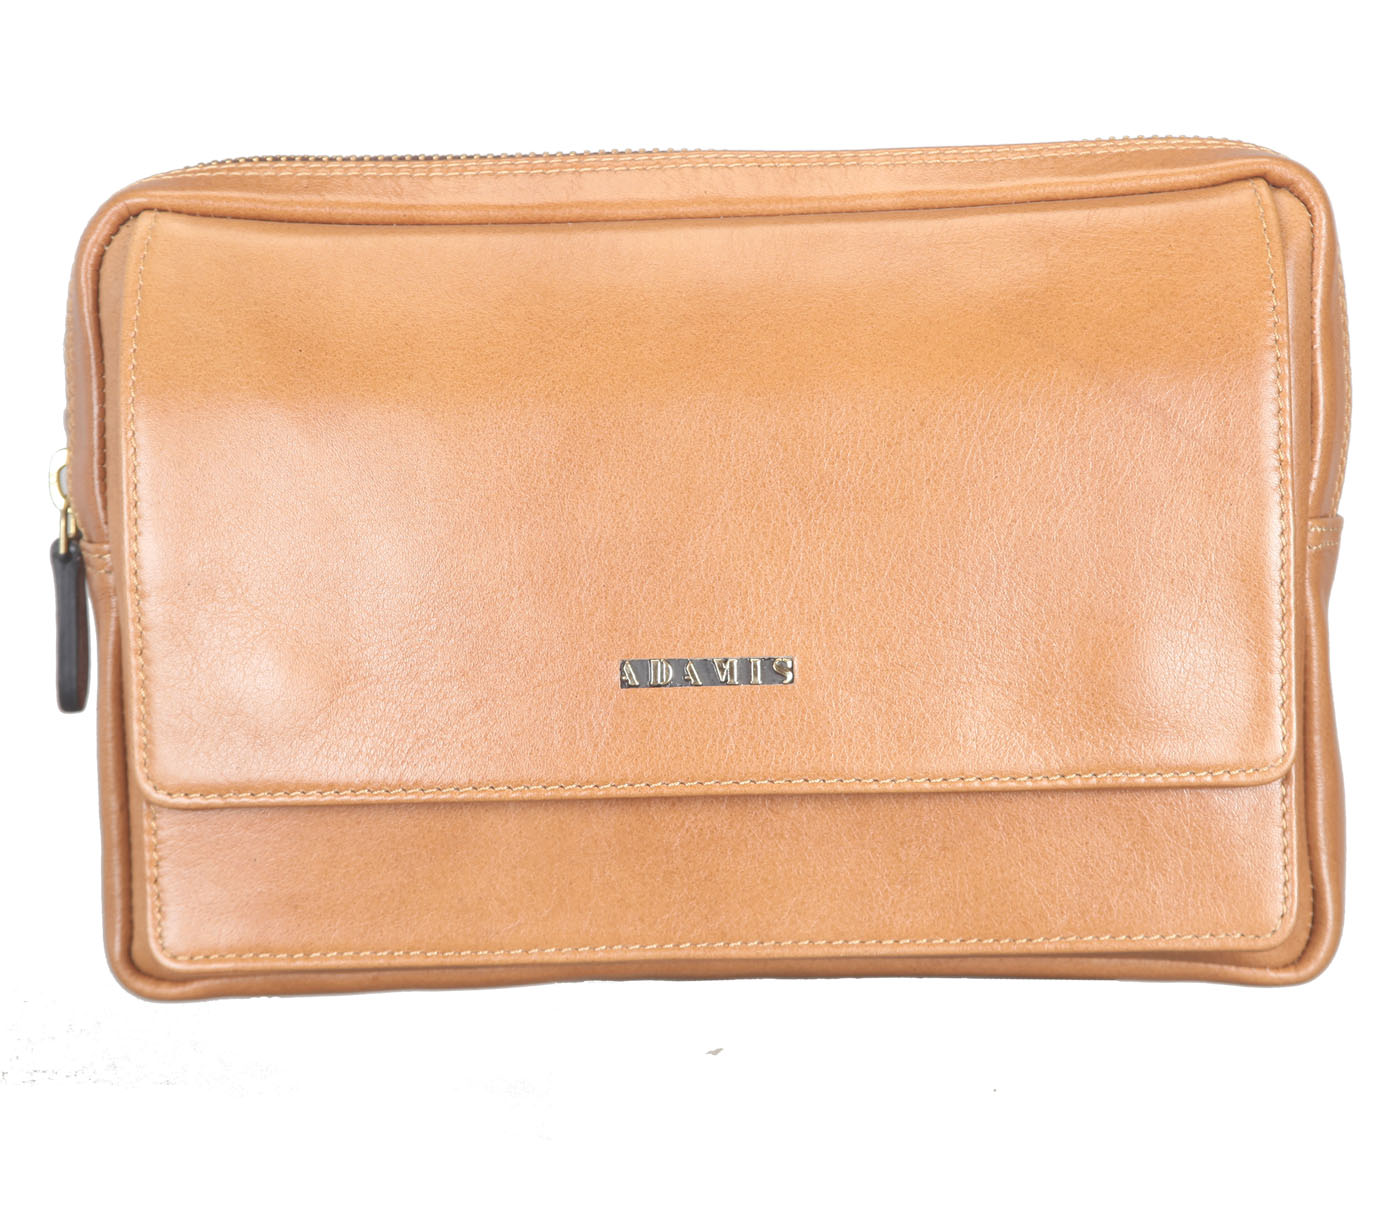 P32-Jesse-Men's bag cum travel pouch in Genuine Leather - Tan